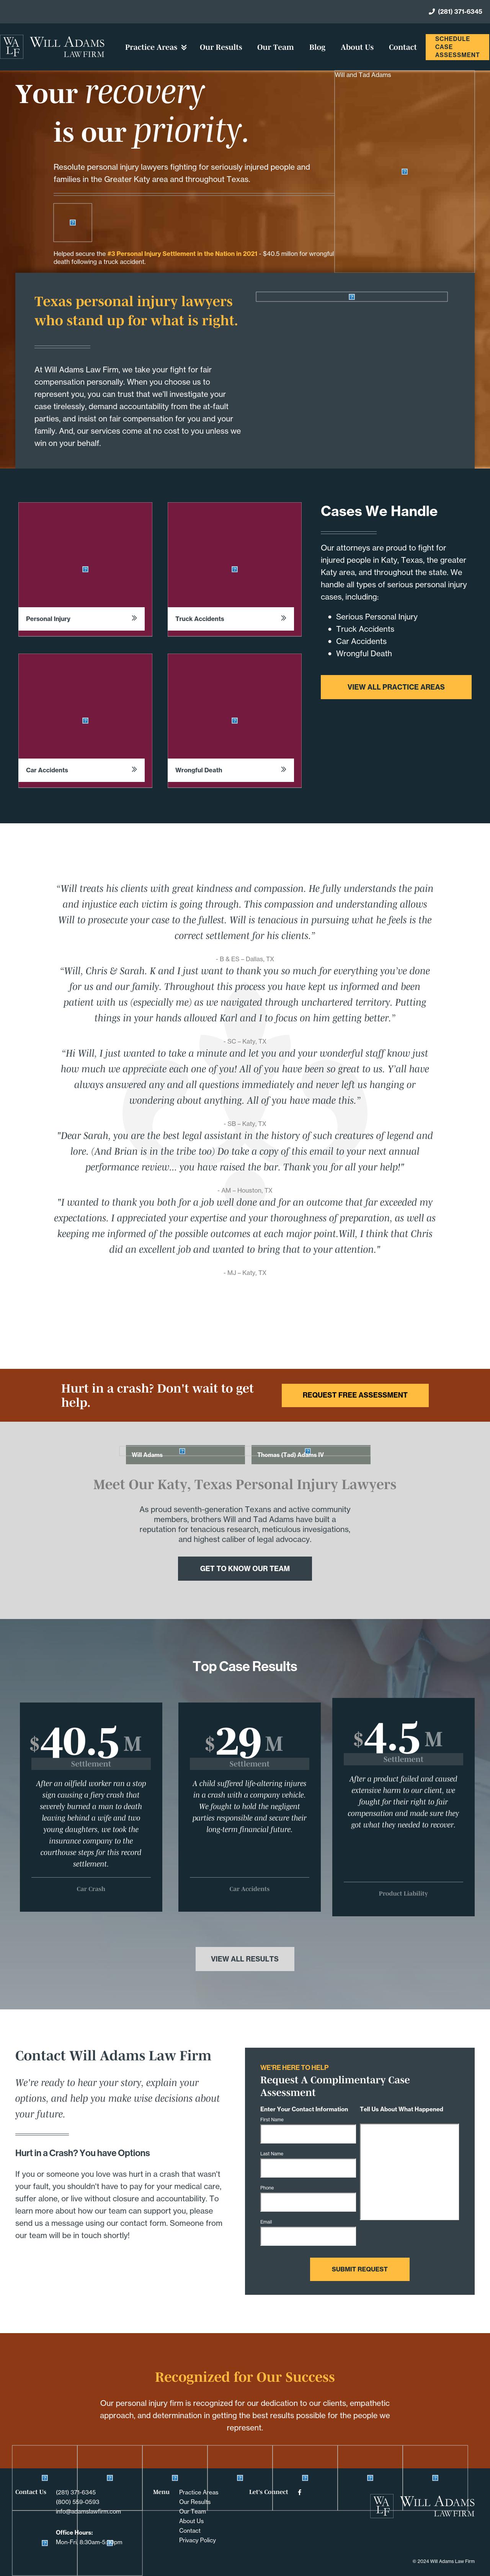 Adams Law Firm - Katy TX Lawyers